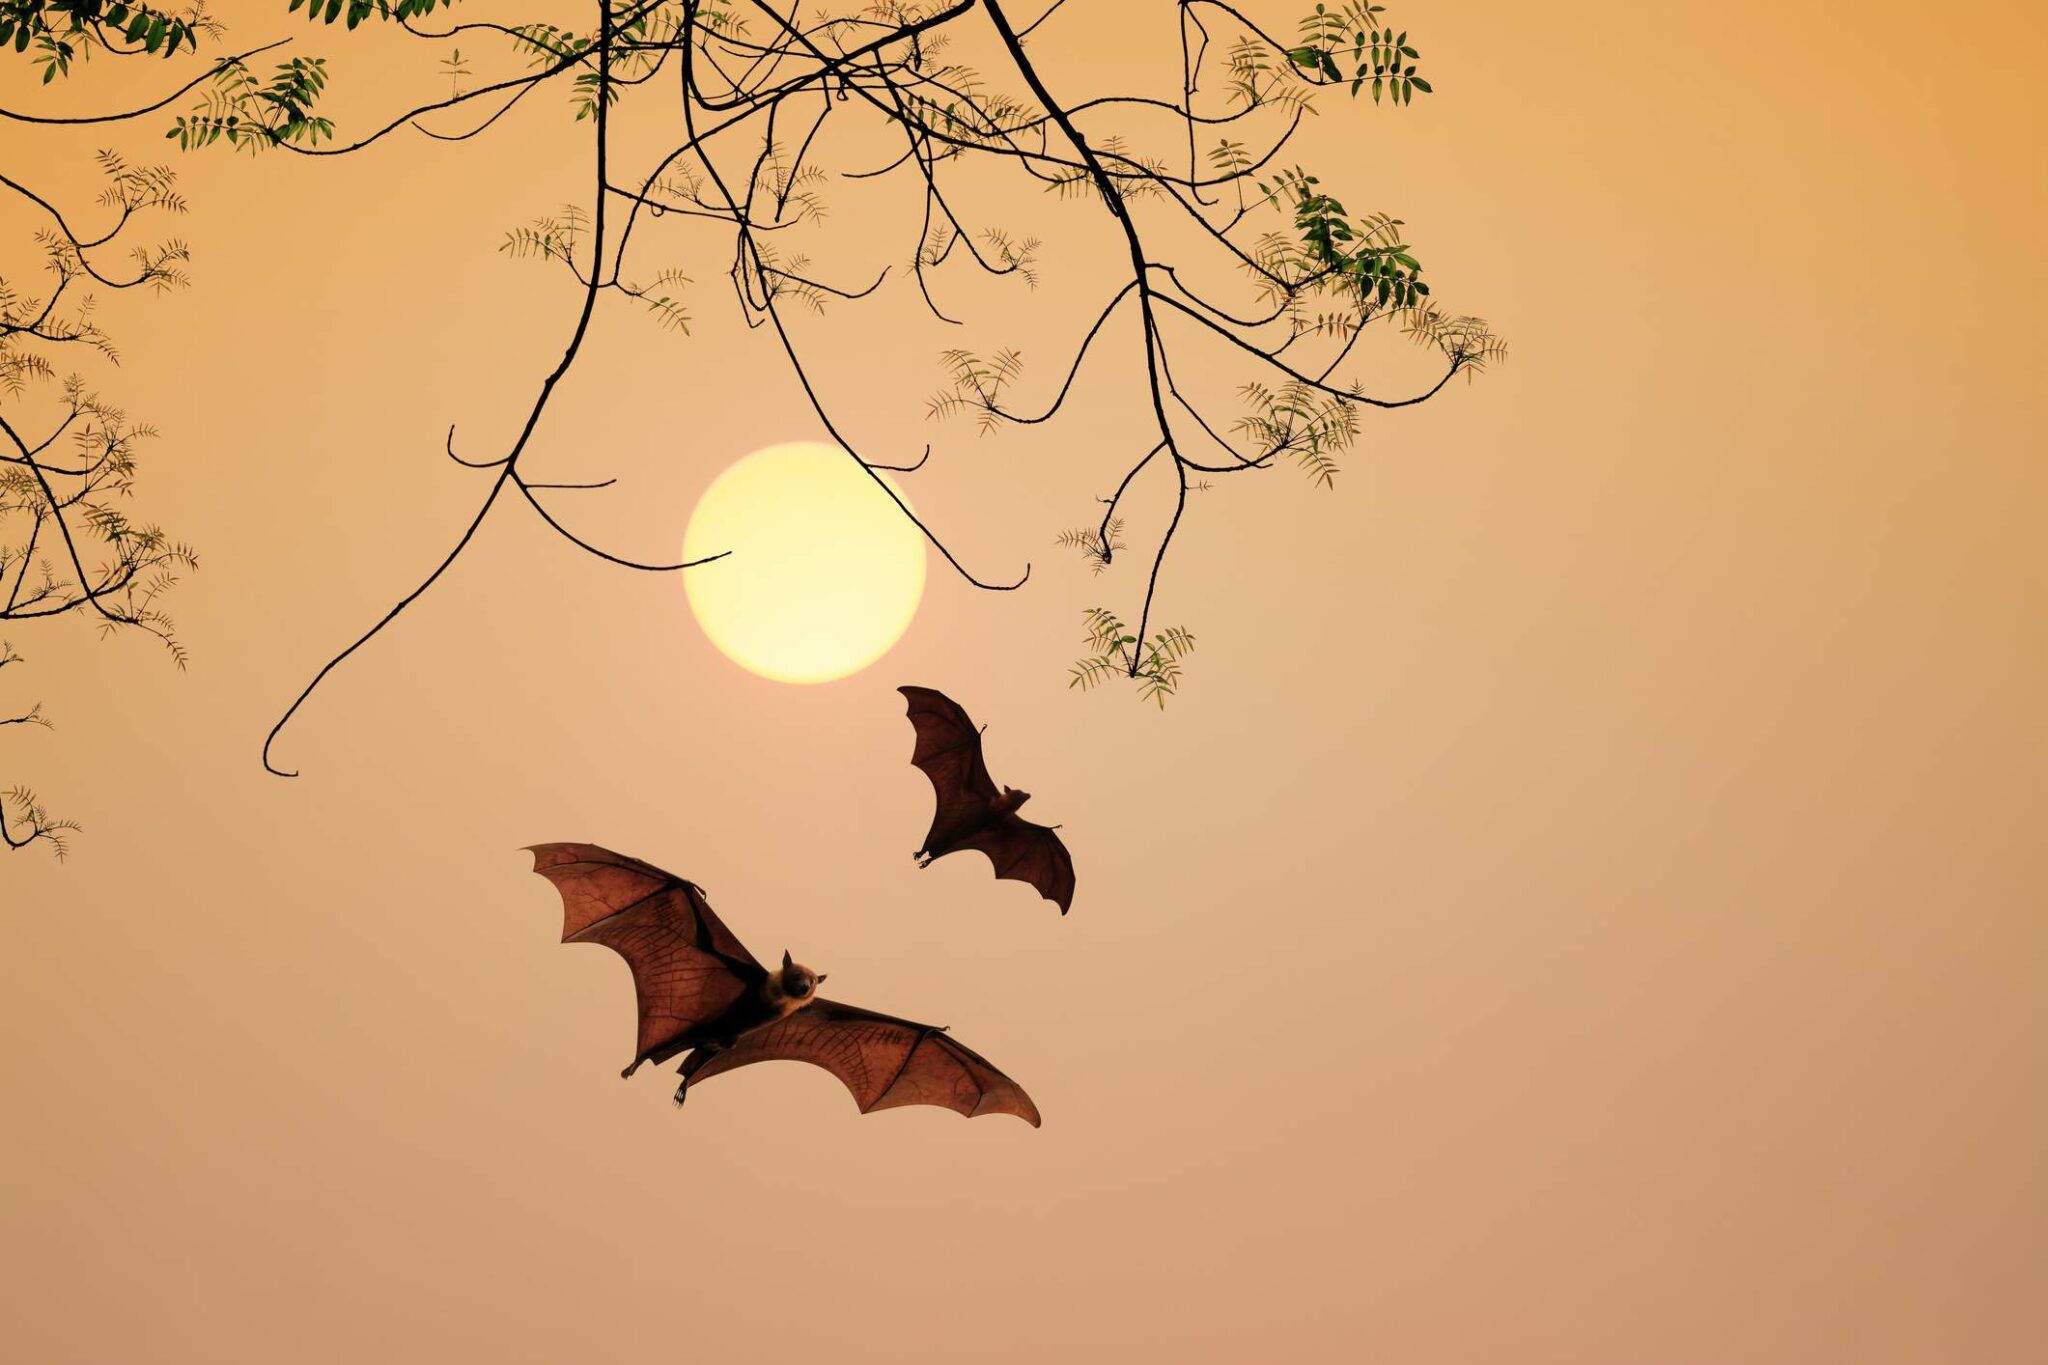 A pair of bats flies in an orange sky close to sunset.